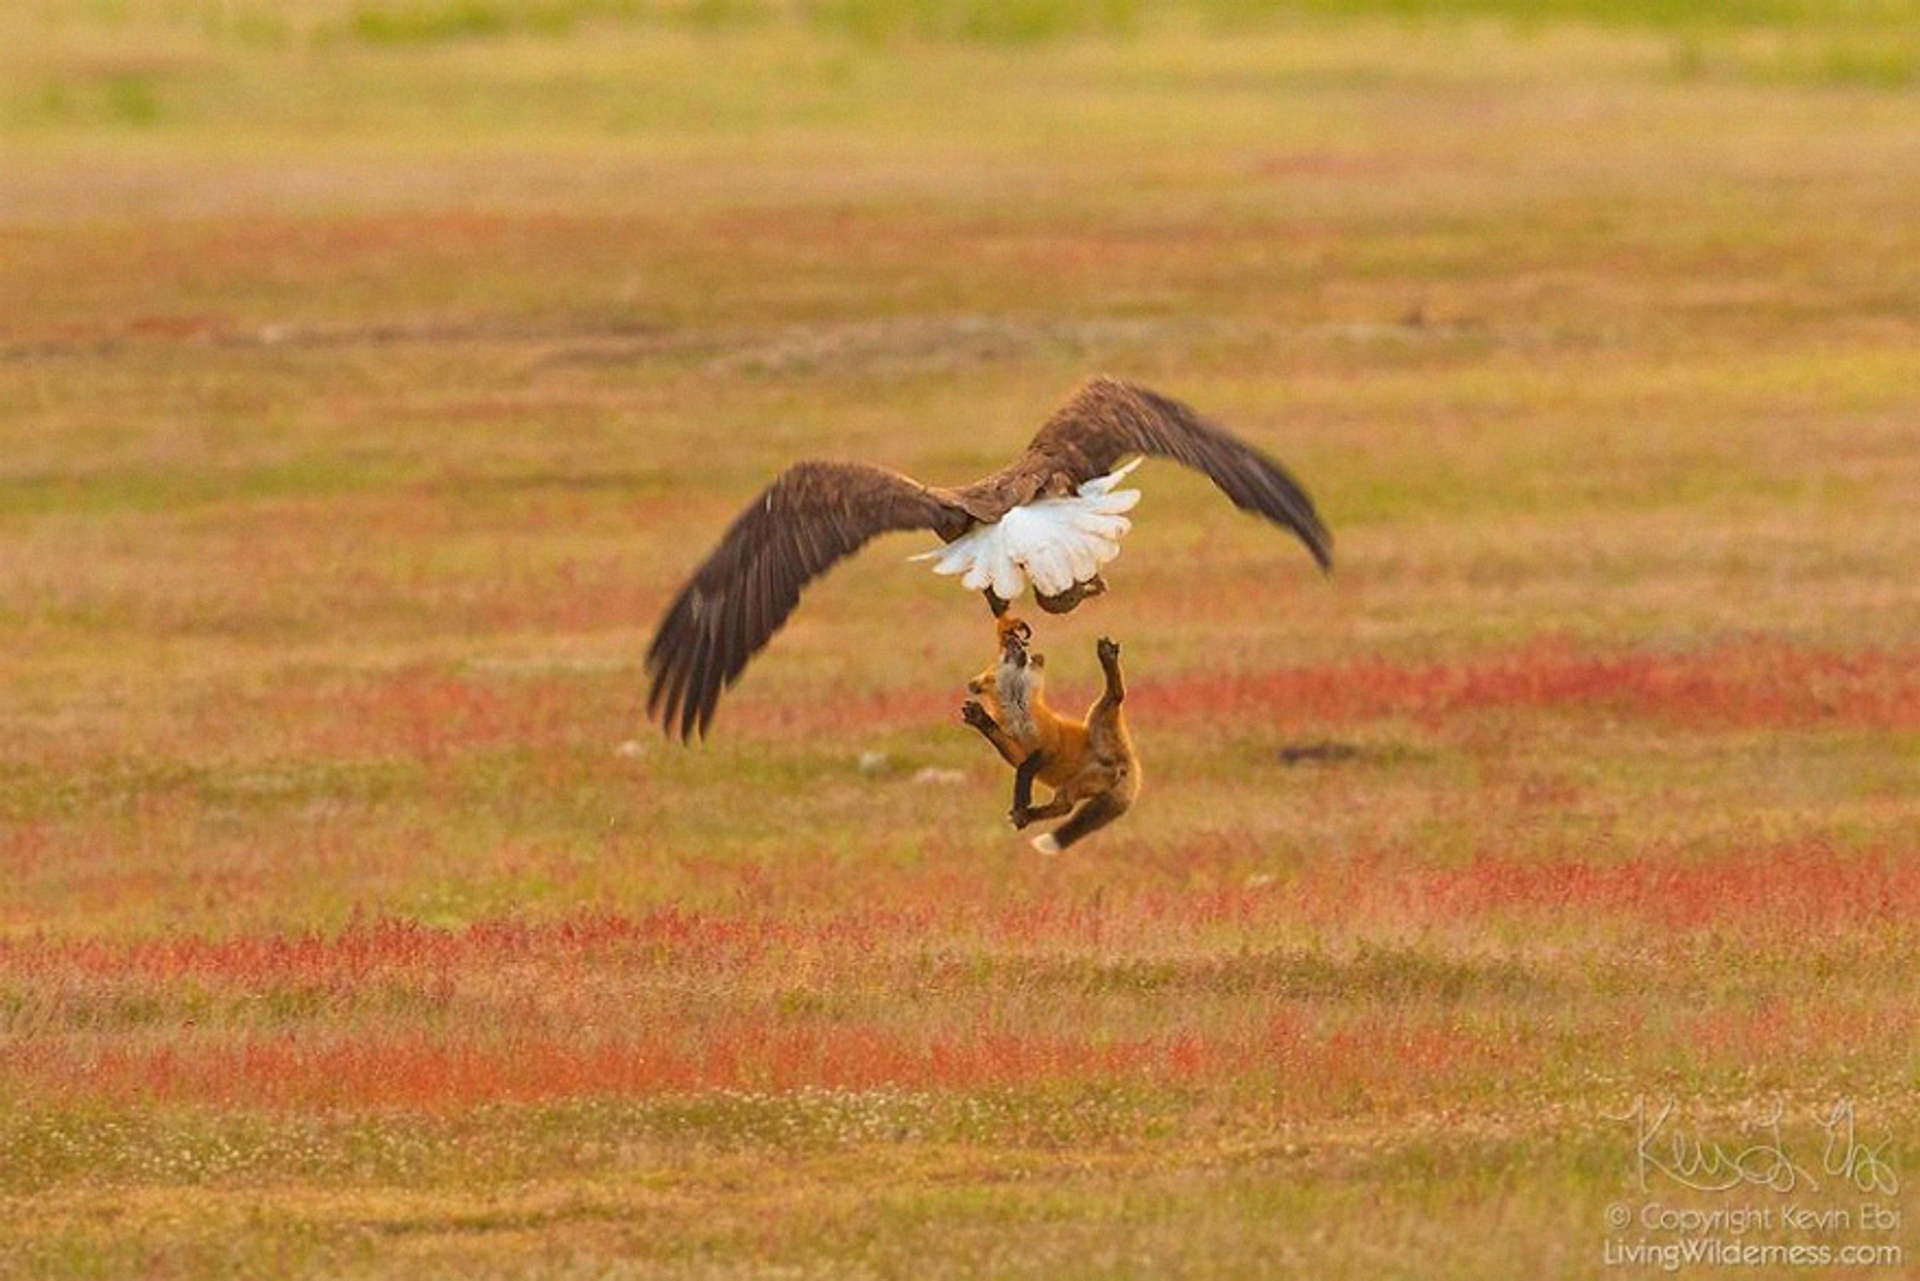 5b07de918459b-wildlife-photography-eagle-fox-fighting-over-rabbit-kevin-ebi-12-5b0661fa2ab13__880